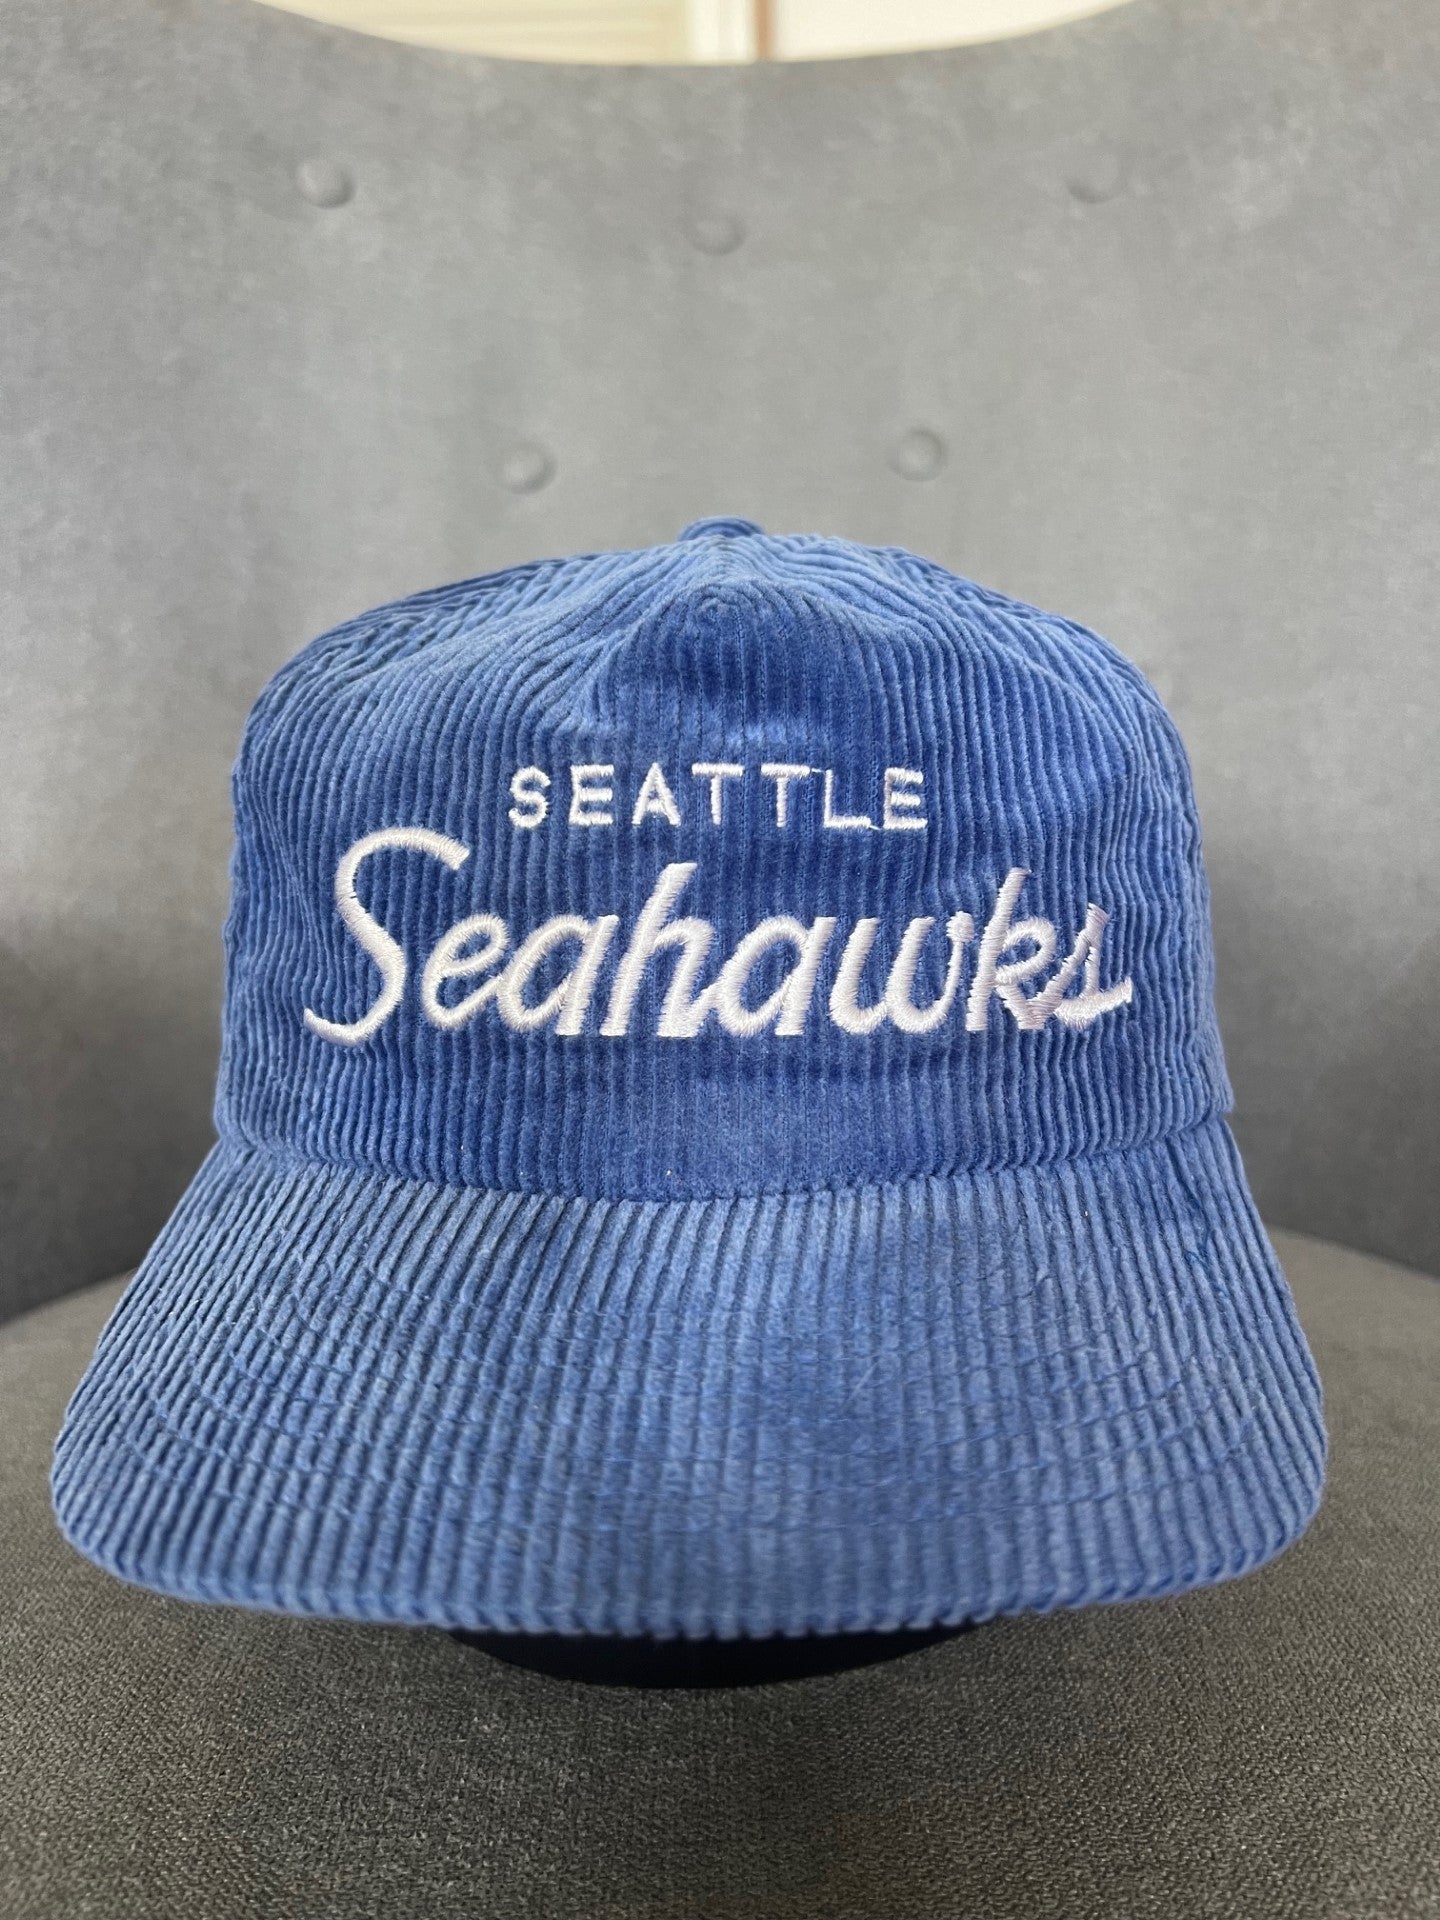 Vintage Seattle Seahawks Sports Specialties corduroy hat